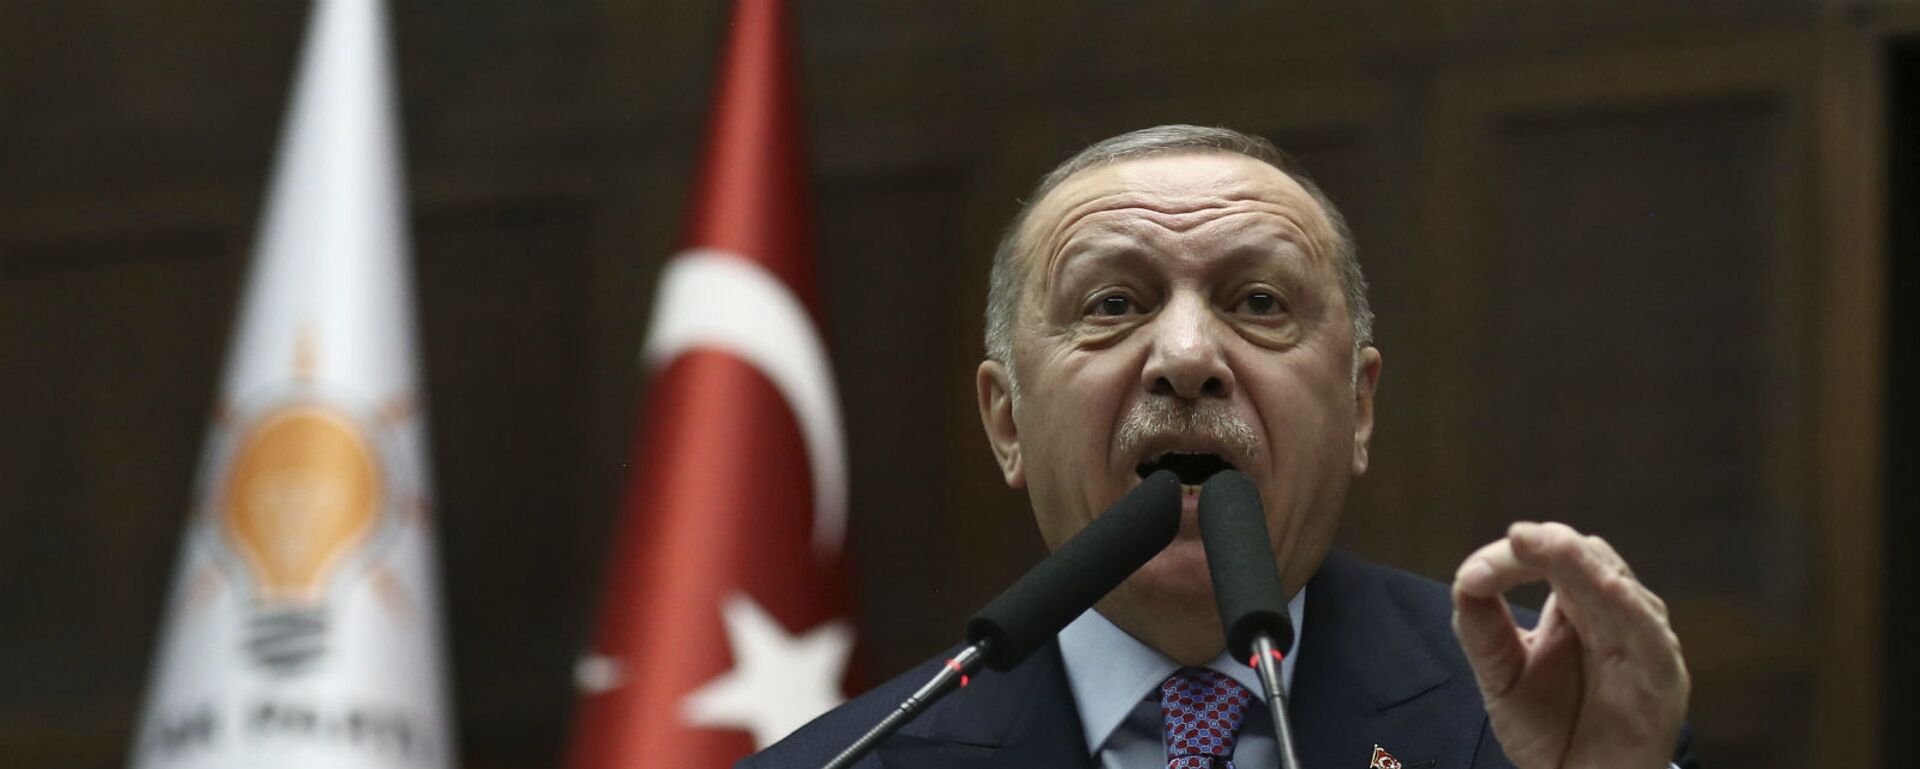 Президент Турции Реджеп Тайип Эрдоган в парламенте (26 февраля 2020). Анкара - Sputnik Армения, 1920, 05.04.2021